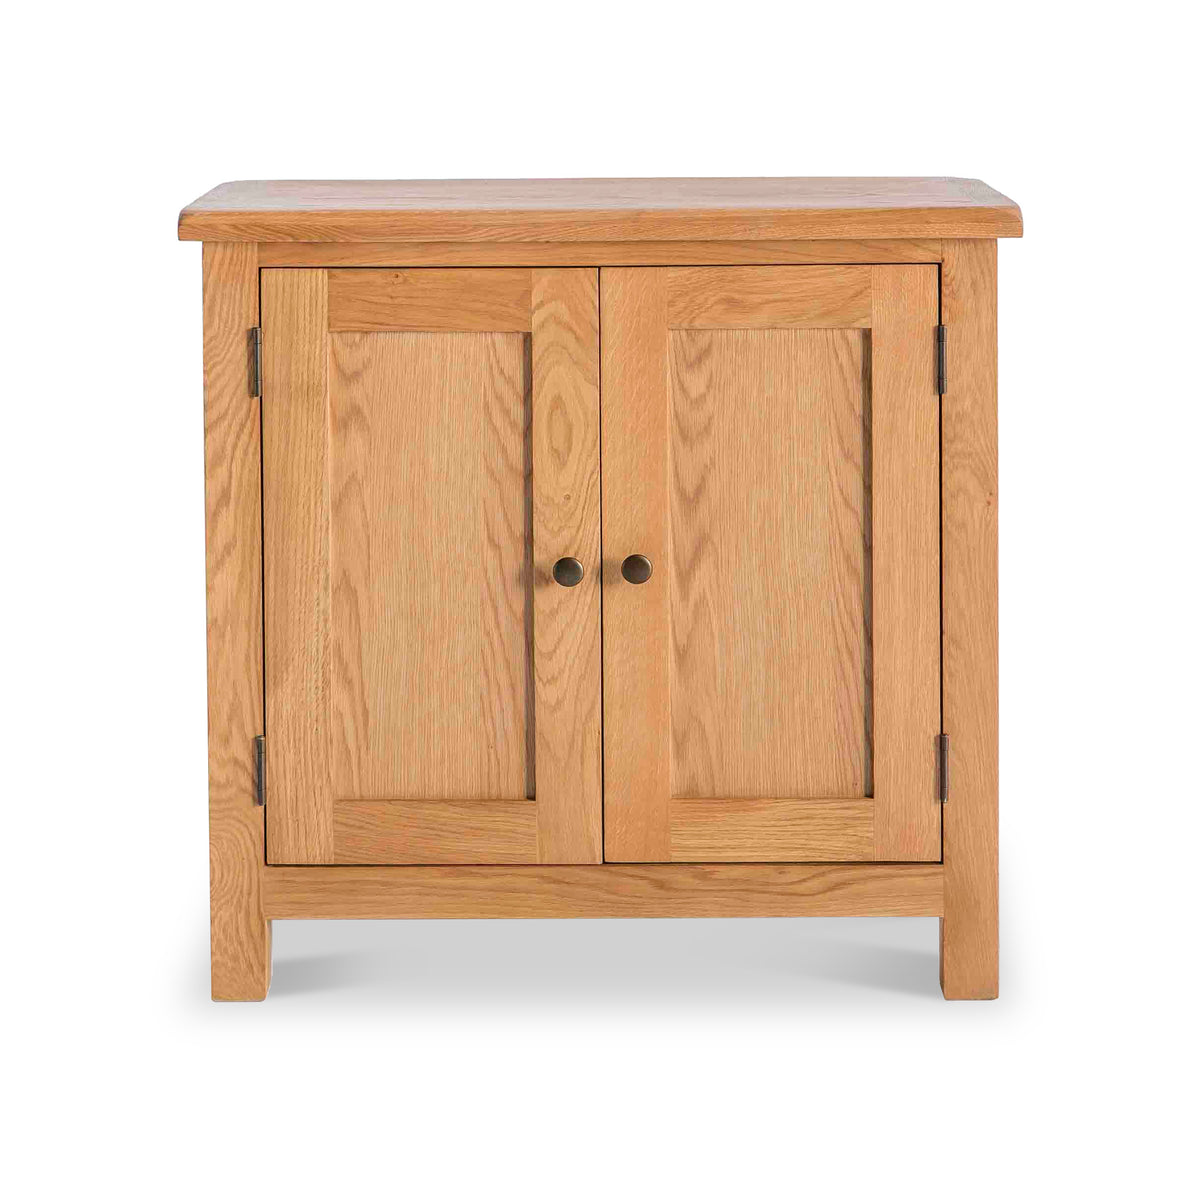 Surrey Oak Small Cupboard from Roseland Furniture